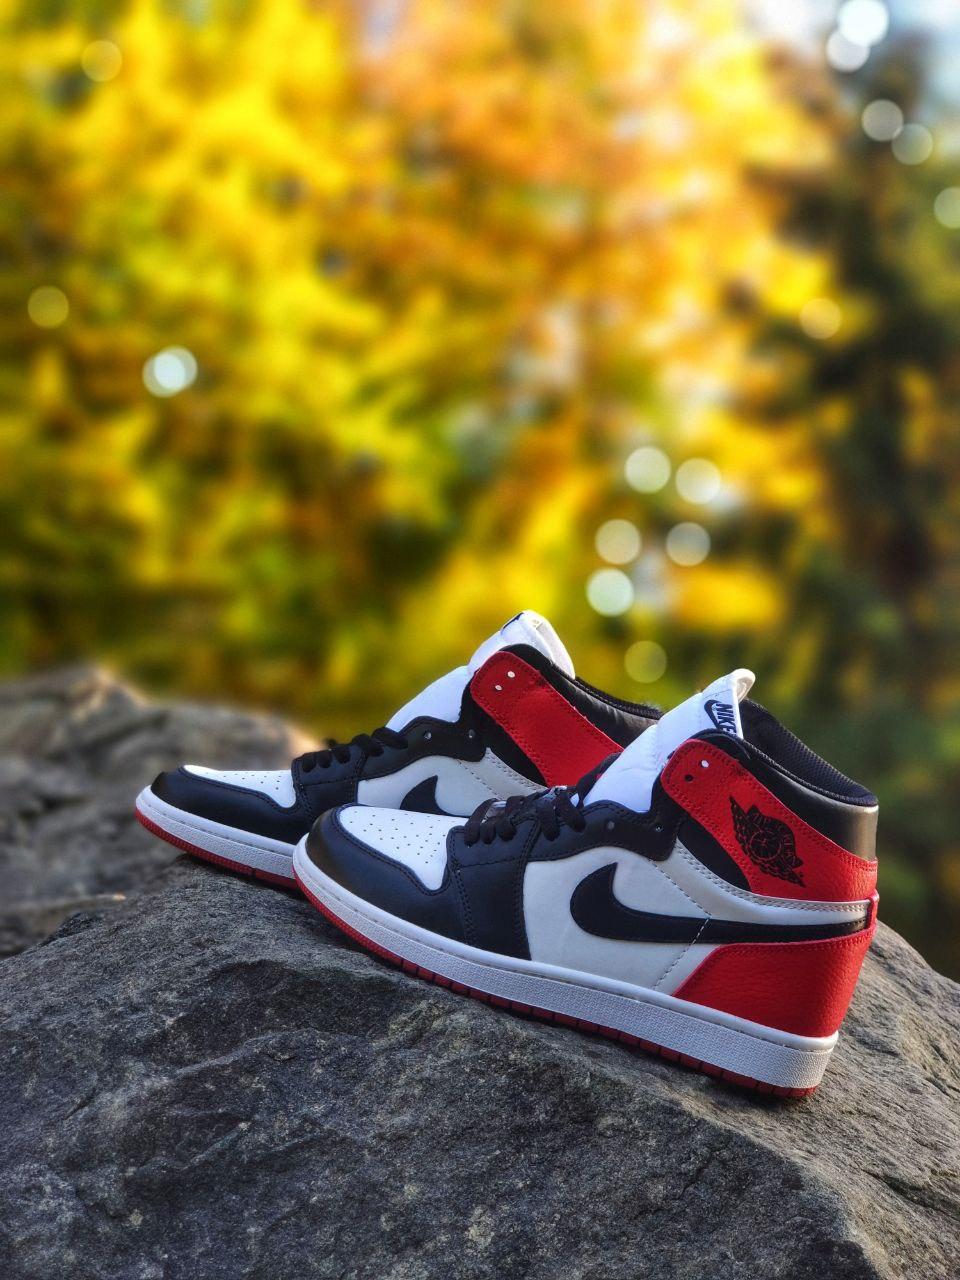 Високі кросівки Nike Air Jordan 1 Hight Black, Red, White